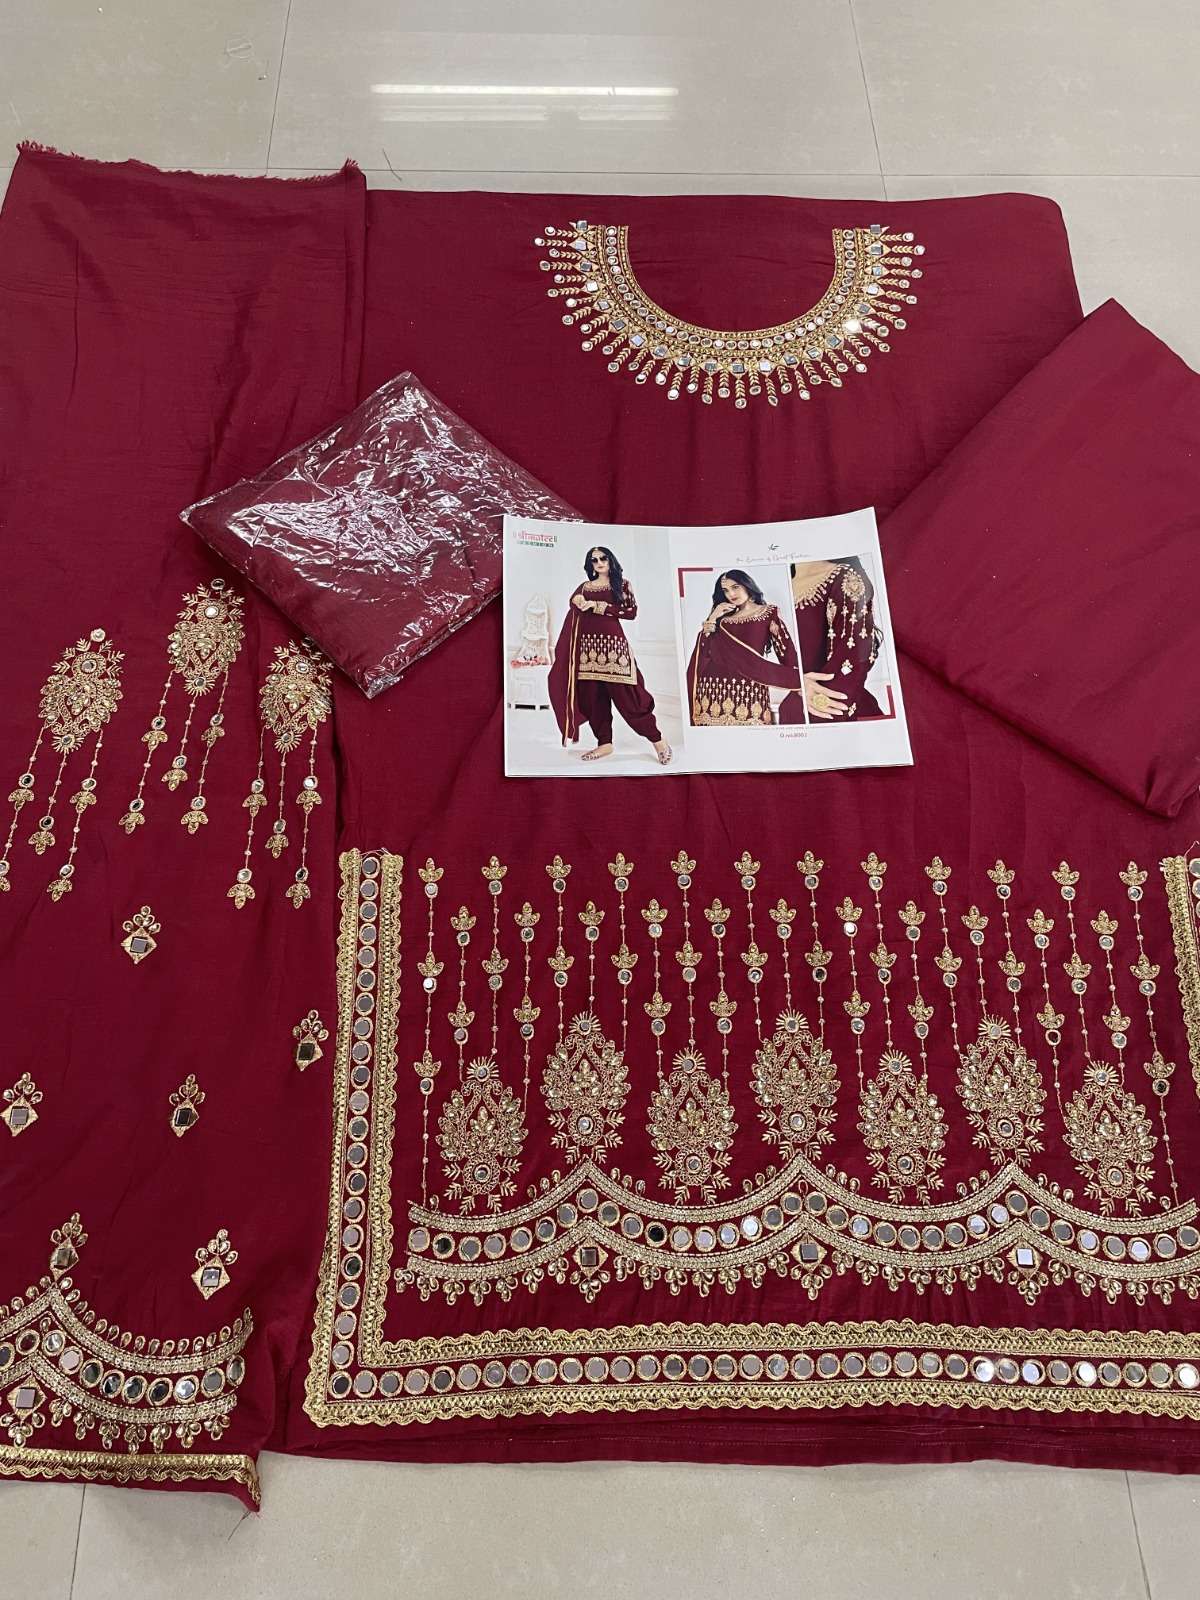 shreematee fashion bebo vol-8 8001-8004 series patiyala suits catalogue online market surat